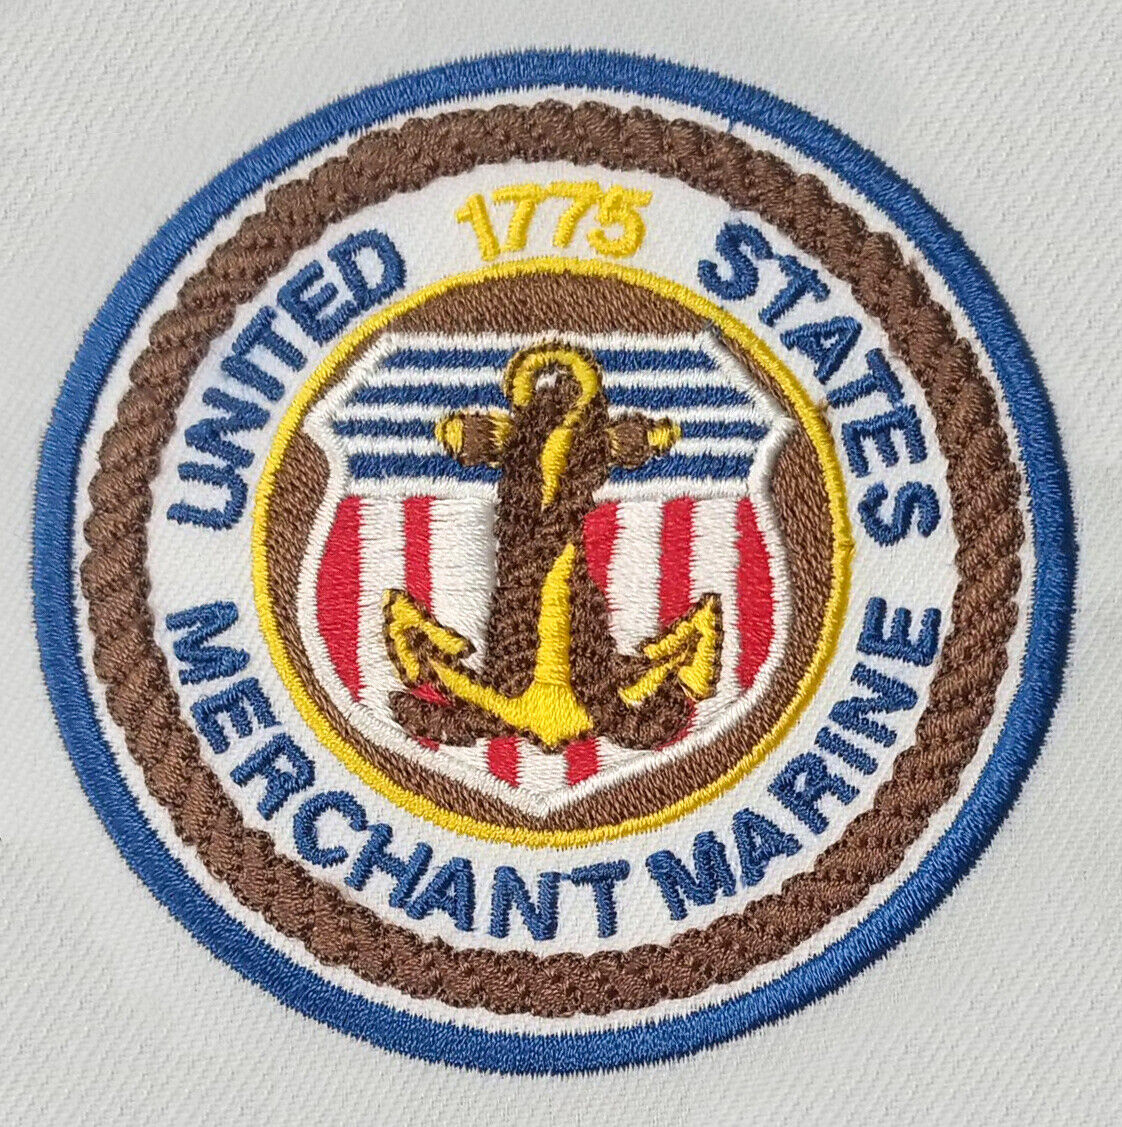 UNITED STATES MERCHANT MARINE PATCH USS US NAVY 1775 Merchant Marine Academy 3